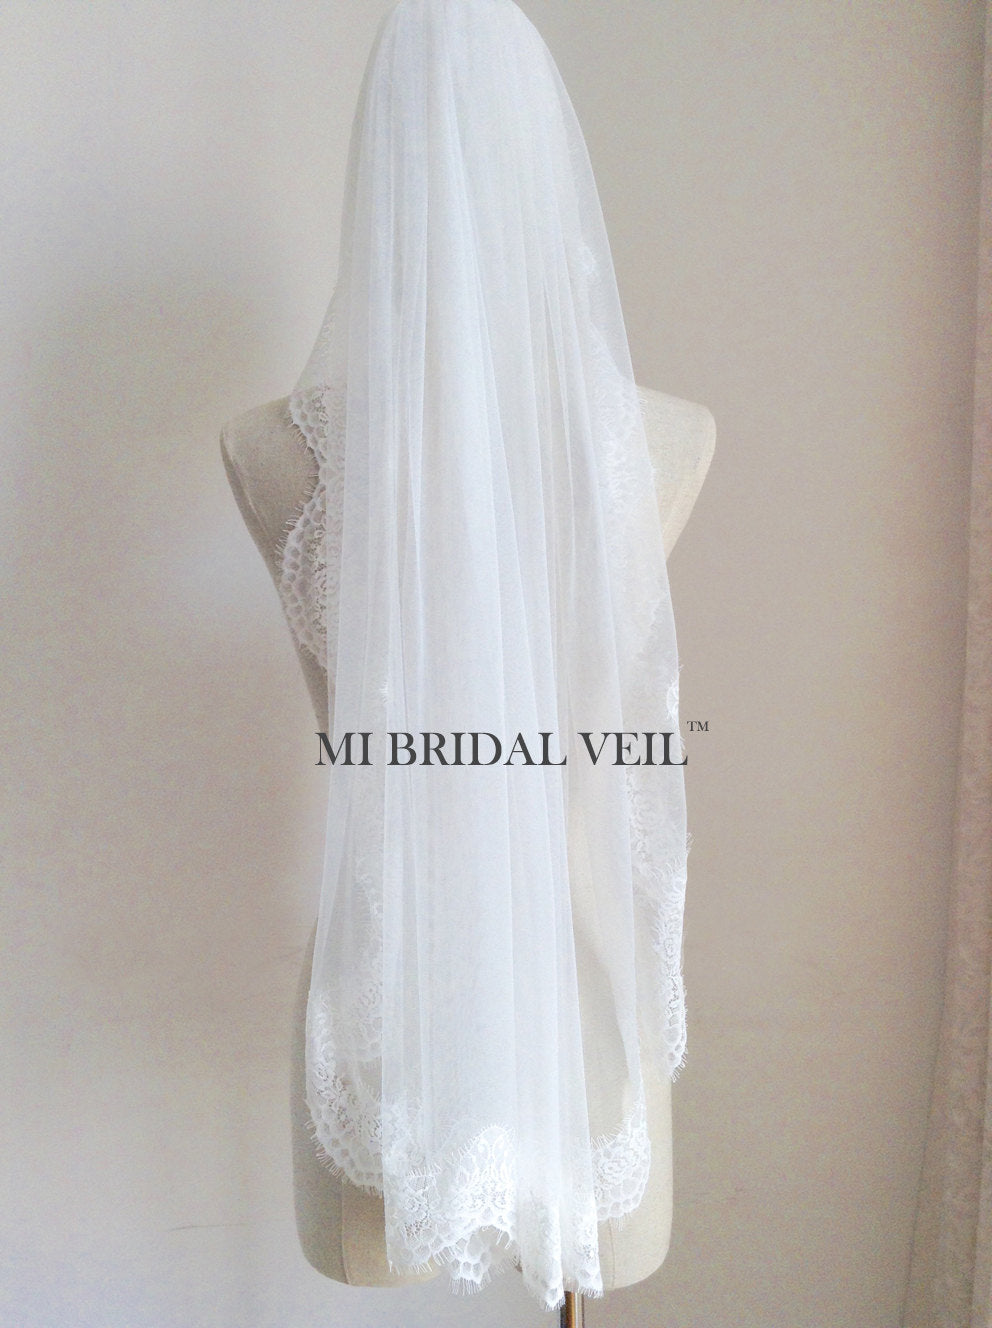 Lace Wedding Veil, Vintage Inspired Rose Lace Bridal Veil, Mi Bridal